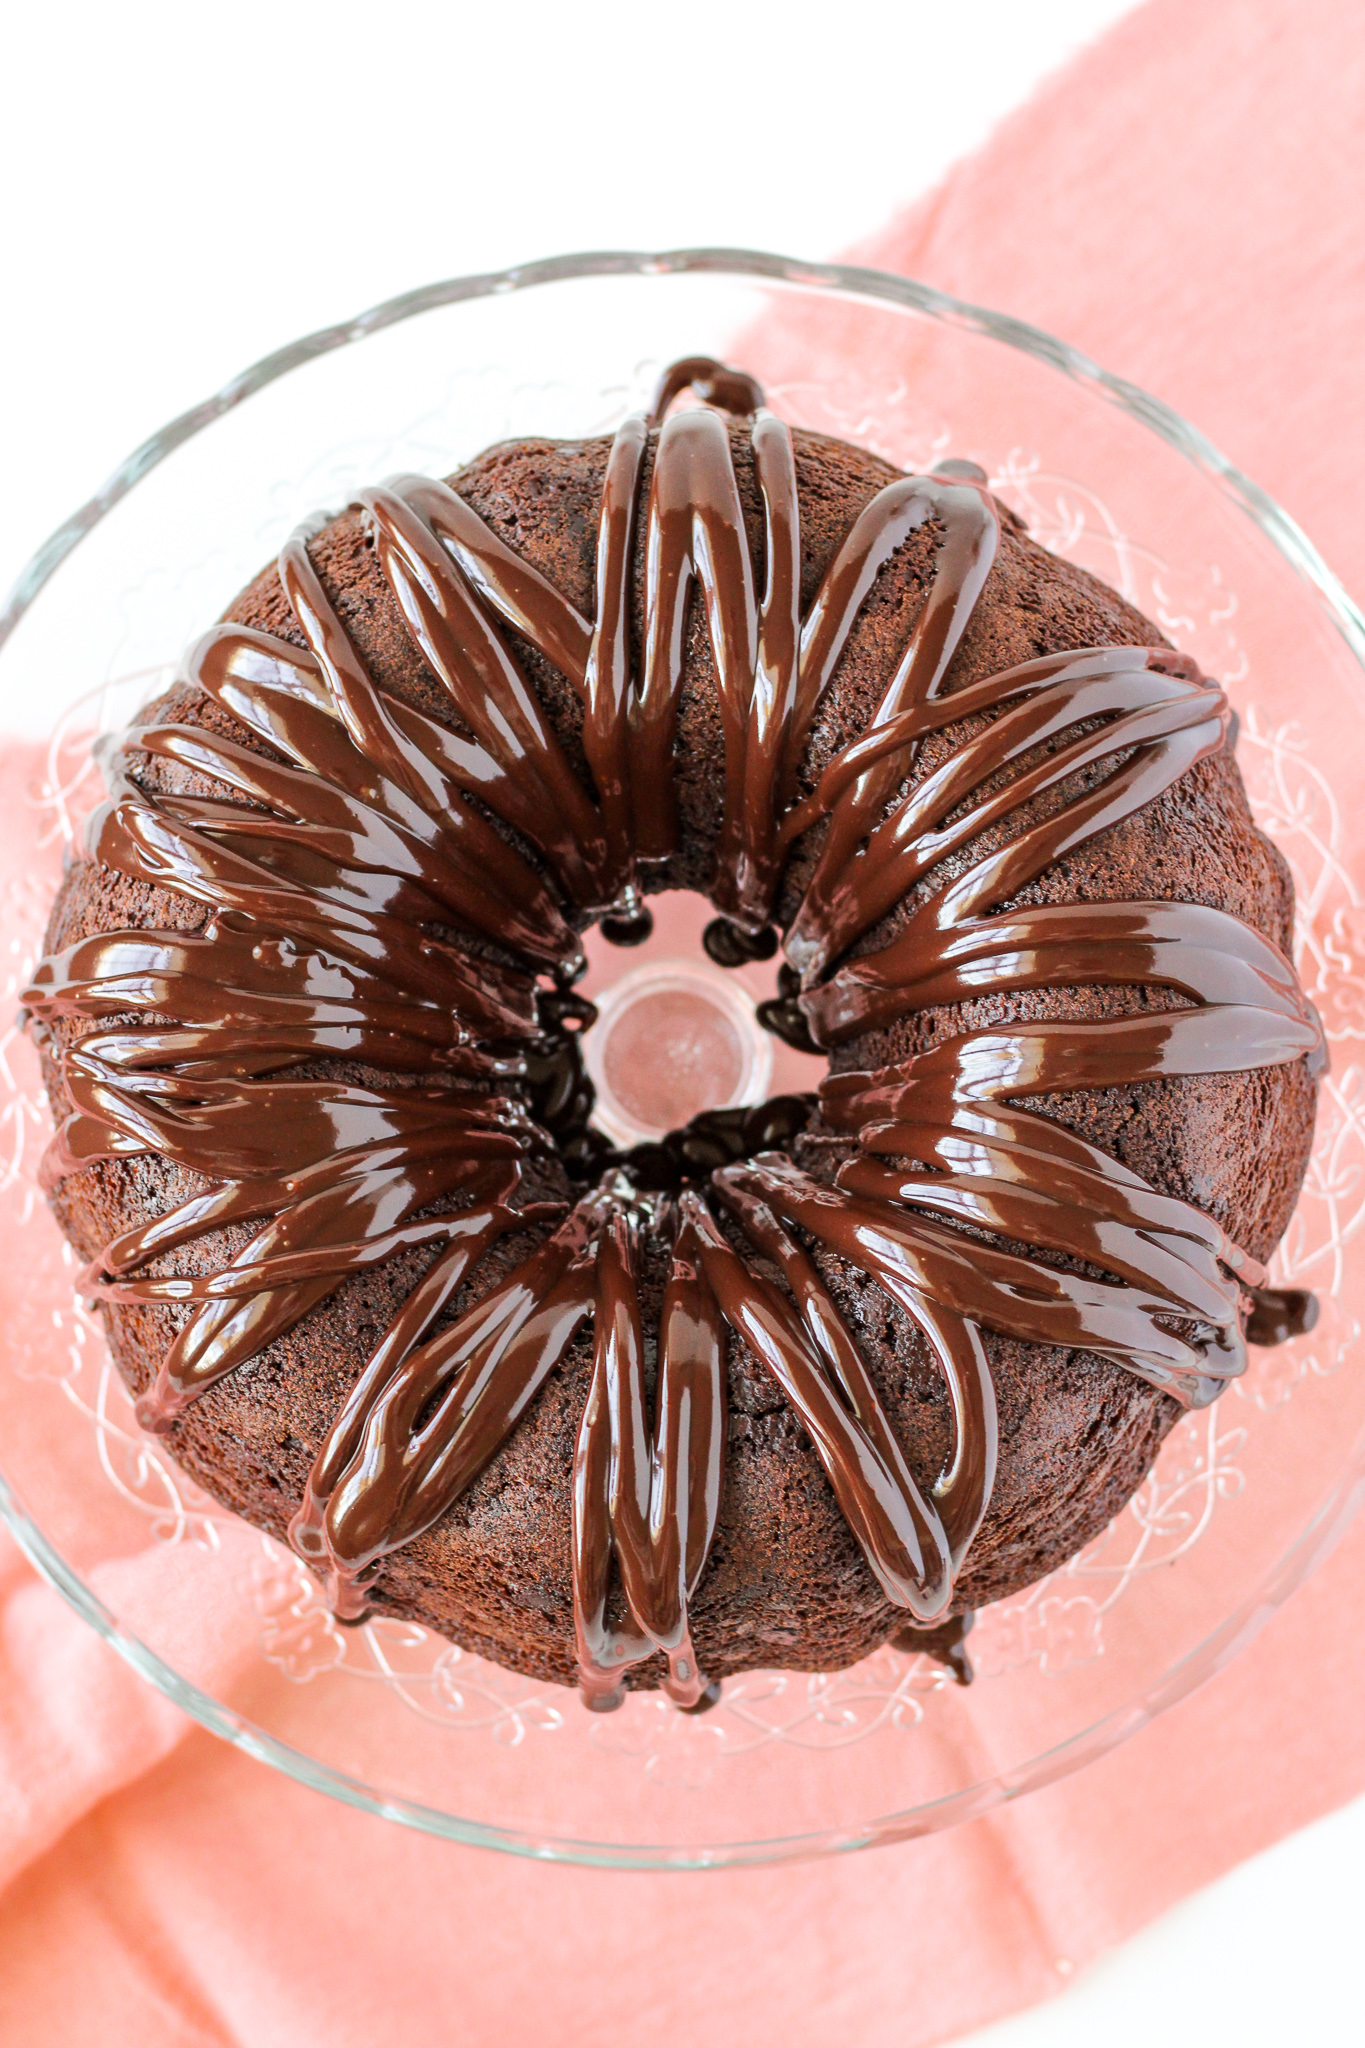 https://www.bakesandblunders.com/wp-content/uploads/2022/12/Chocolate-Mayonnaise-Bundt-Cake-17.jpg